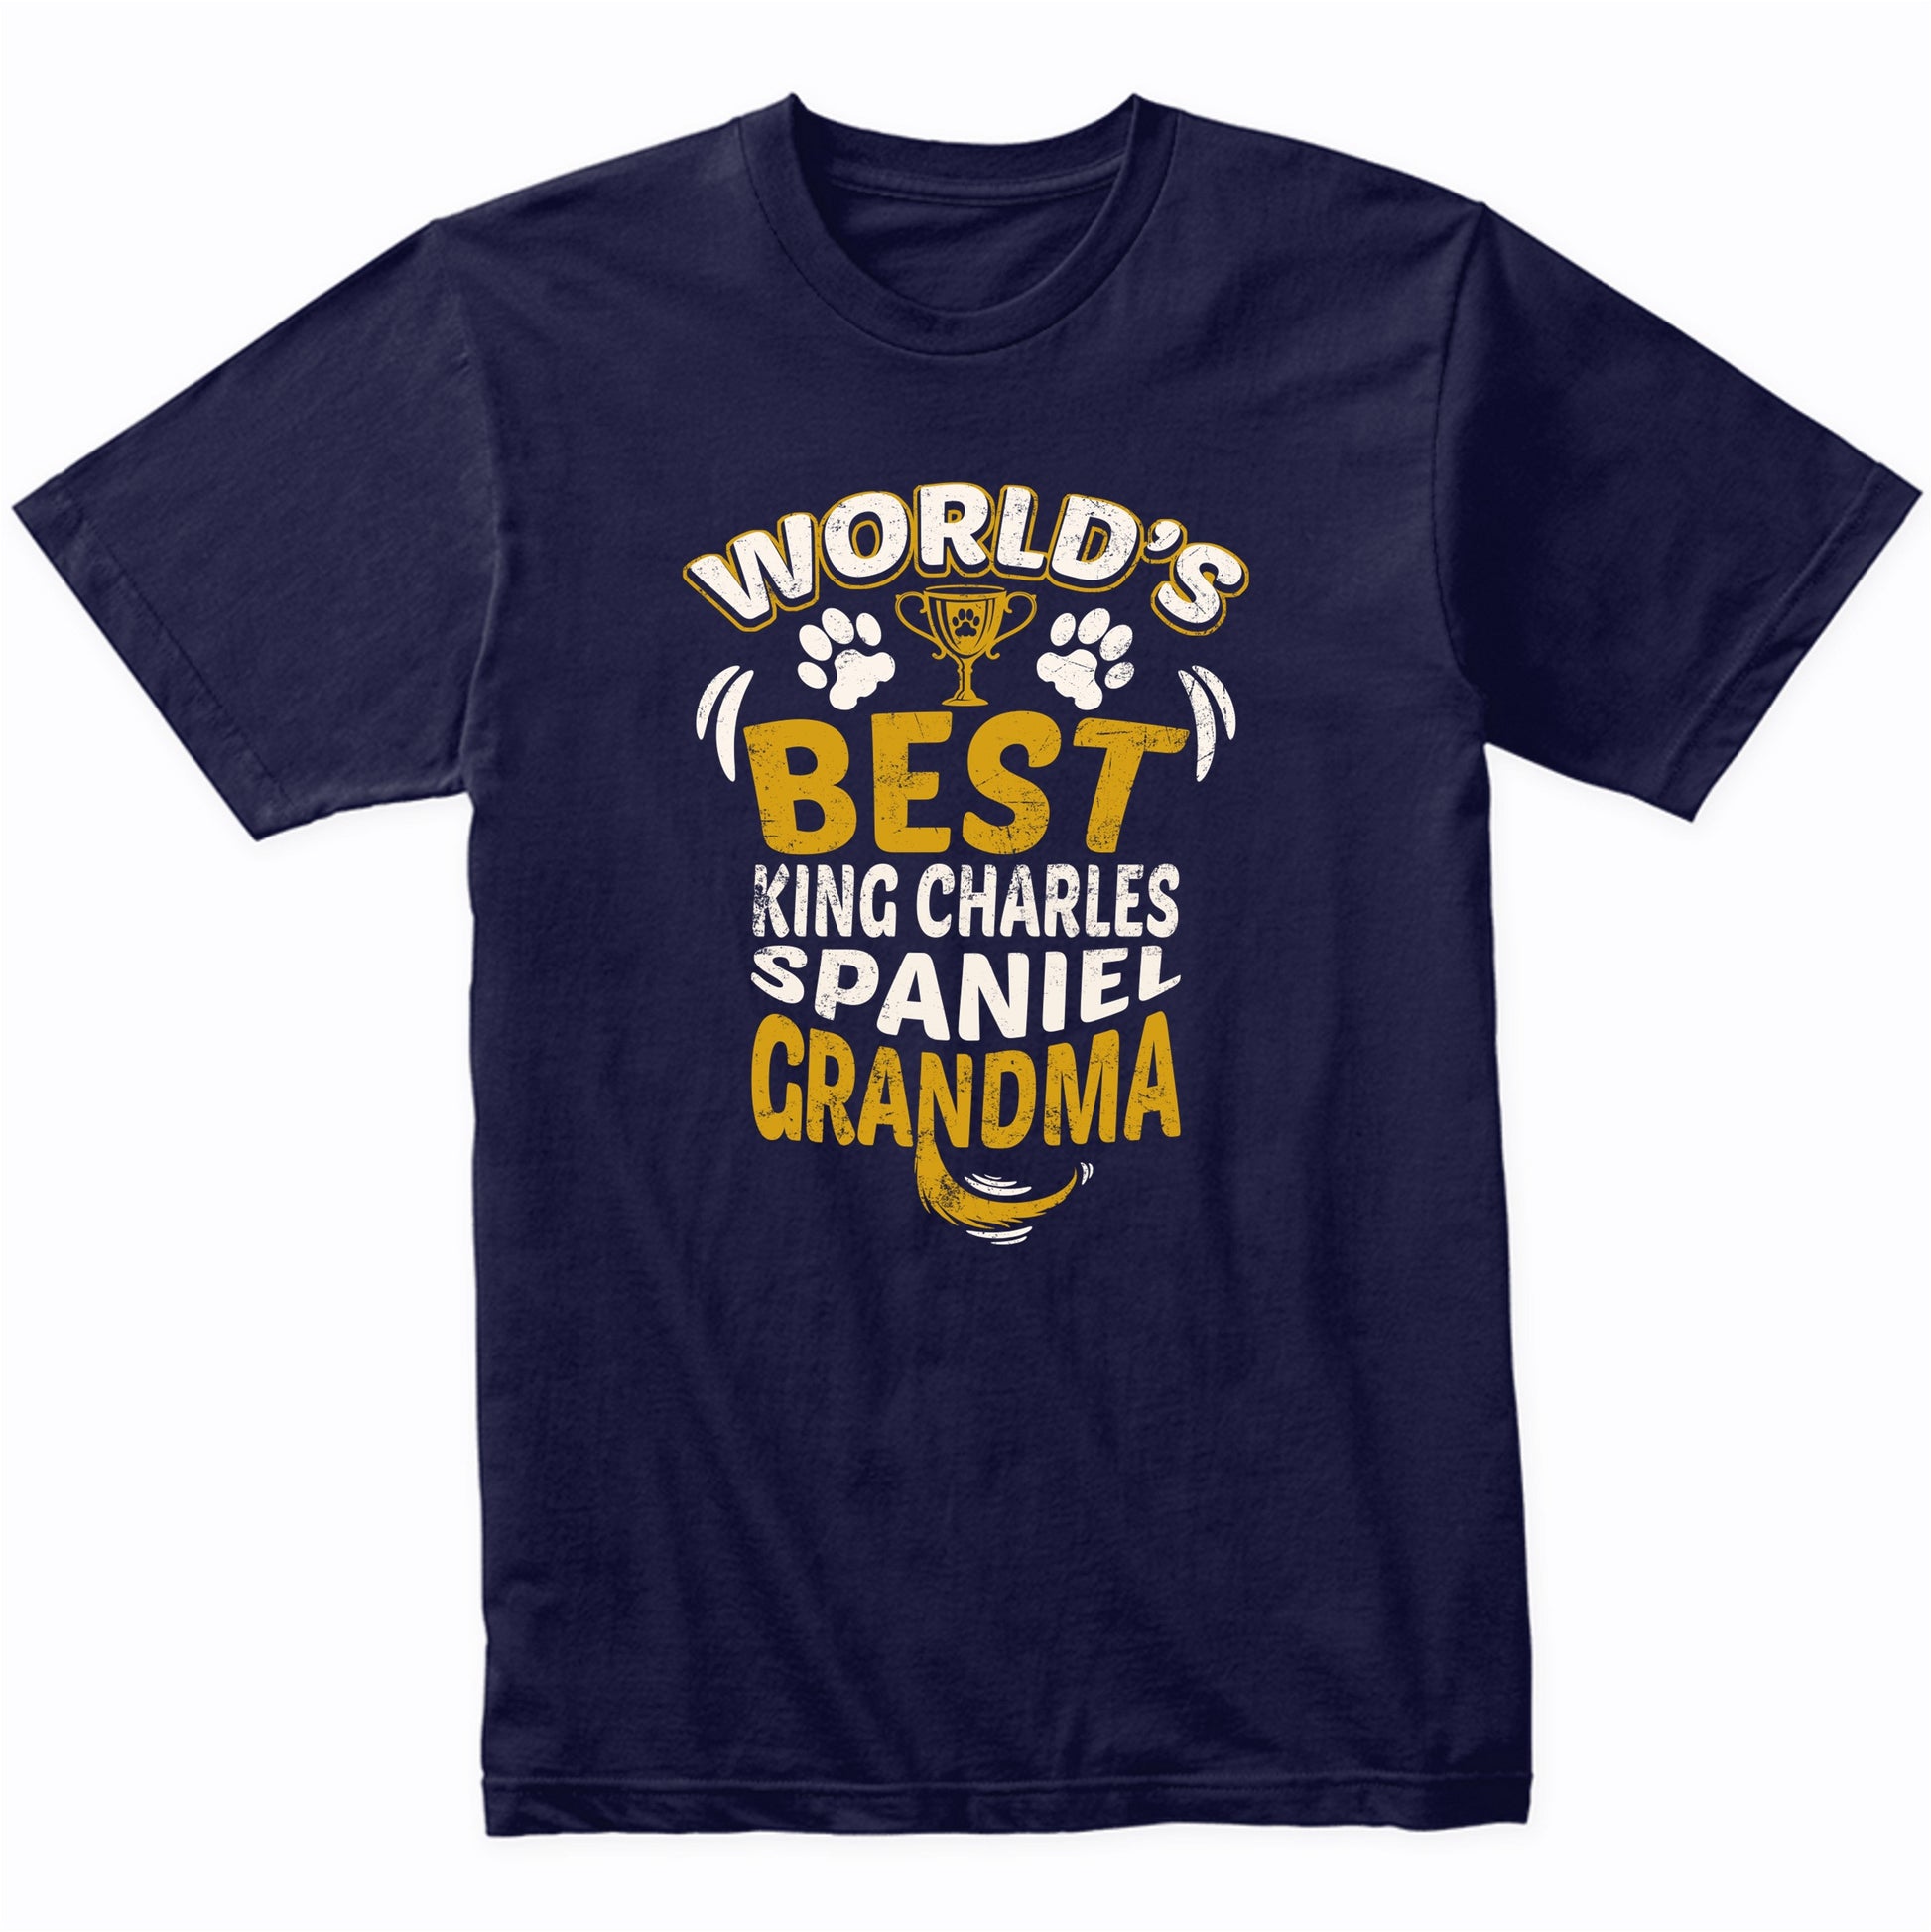 World's Best King Charles Spaniel Grandma Graphic T-Shirt